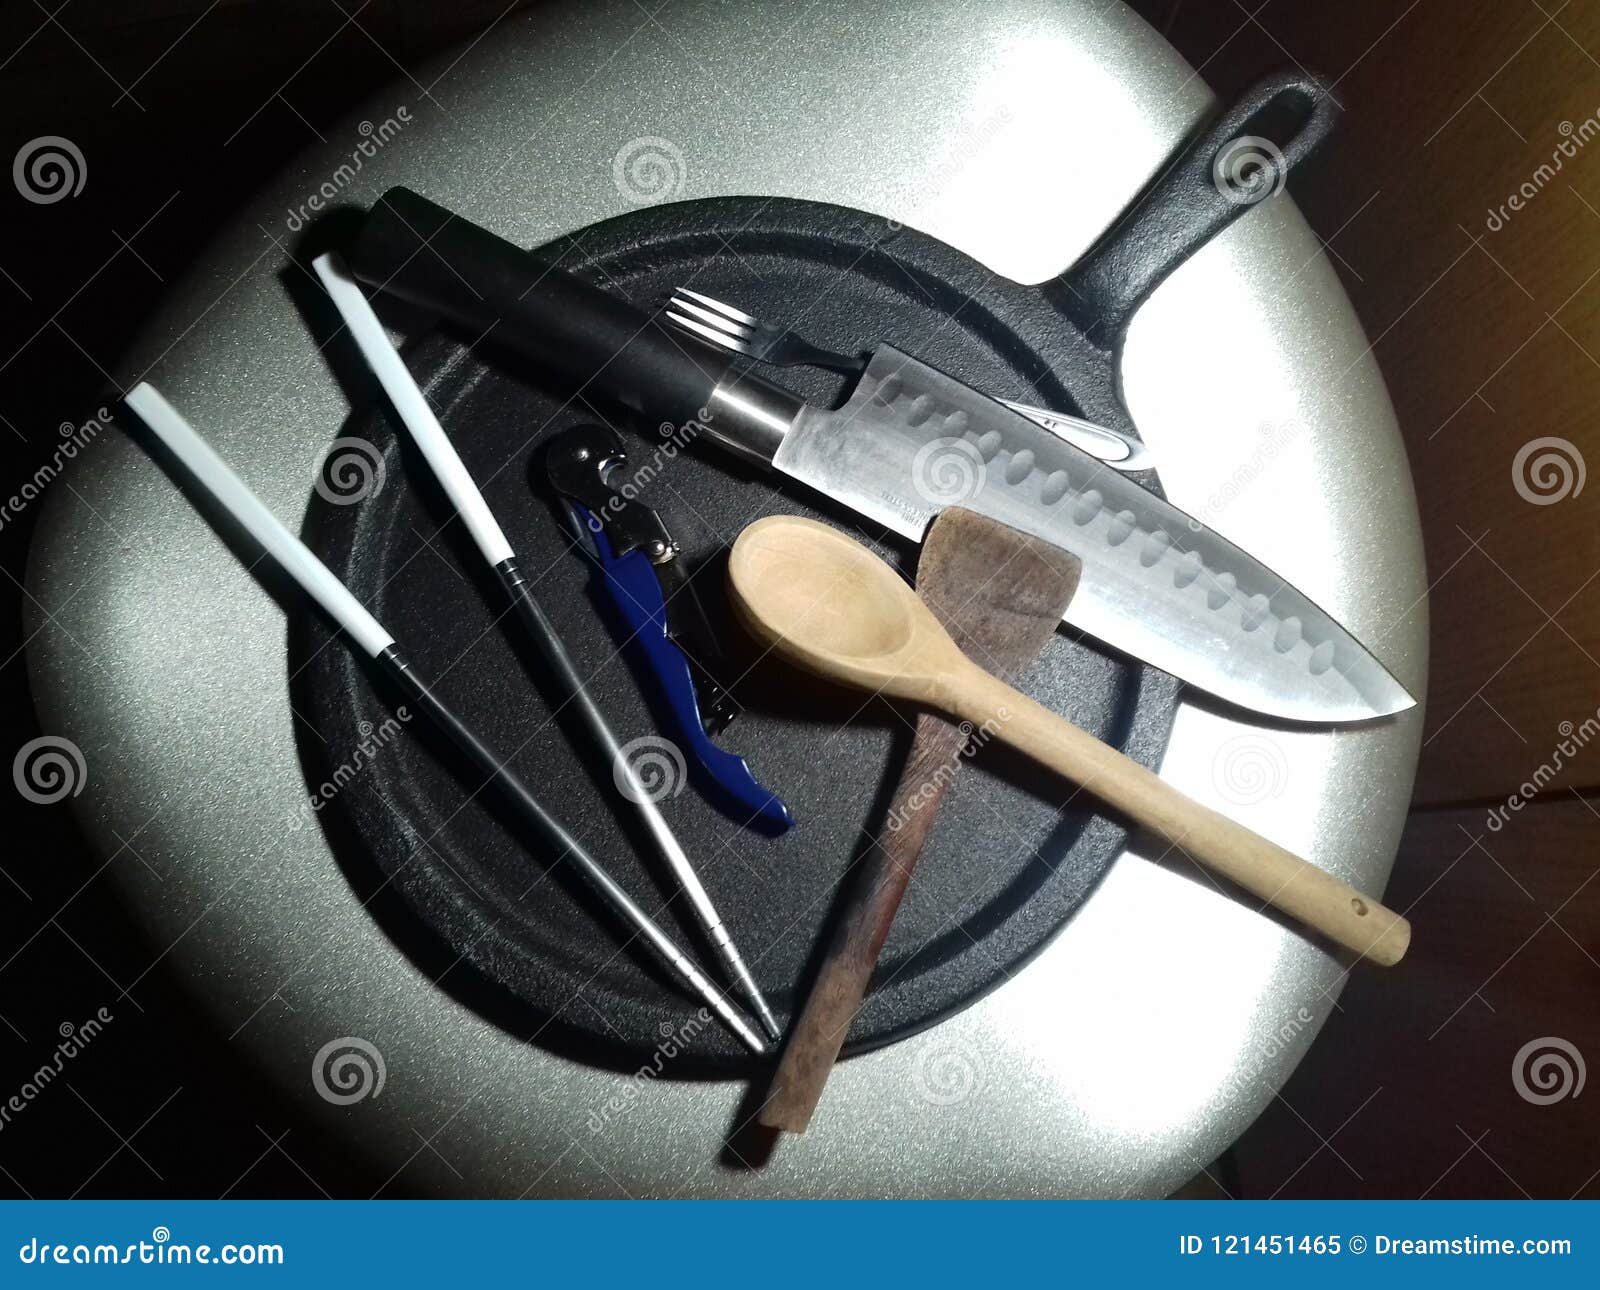 kitchen basics tools